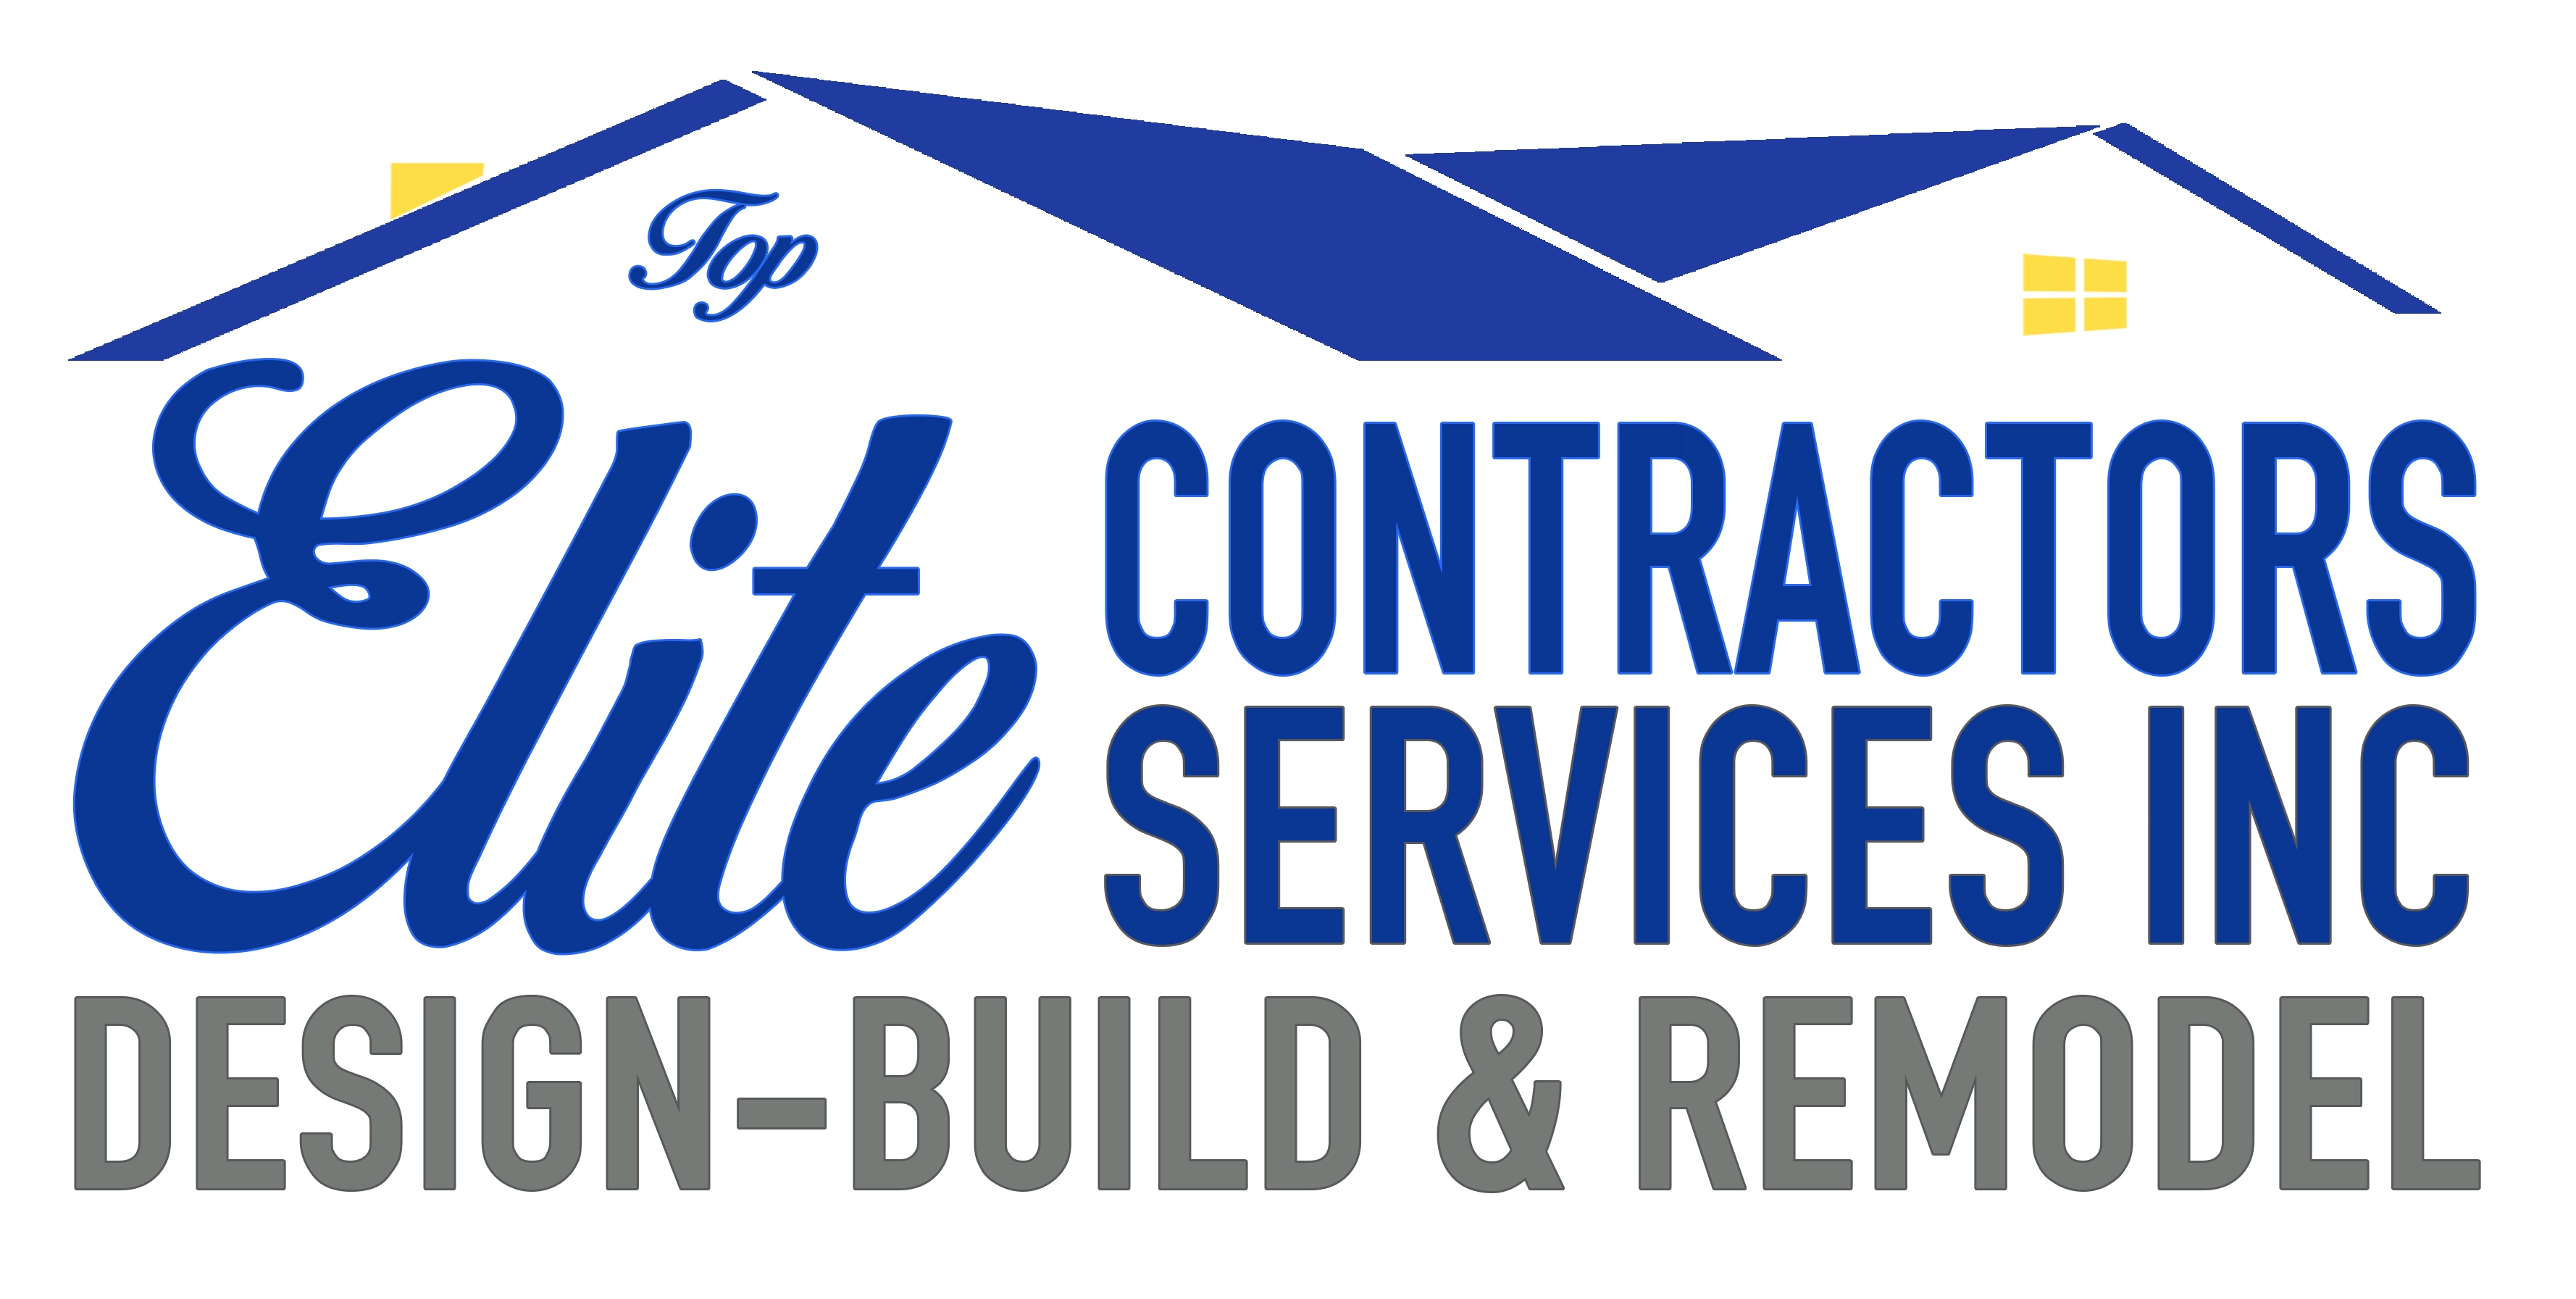 Elite Contractors Services Inc Logo